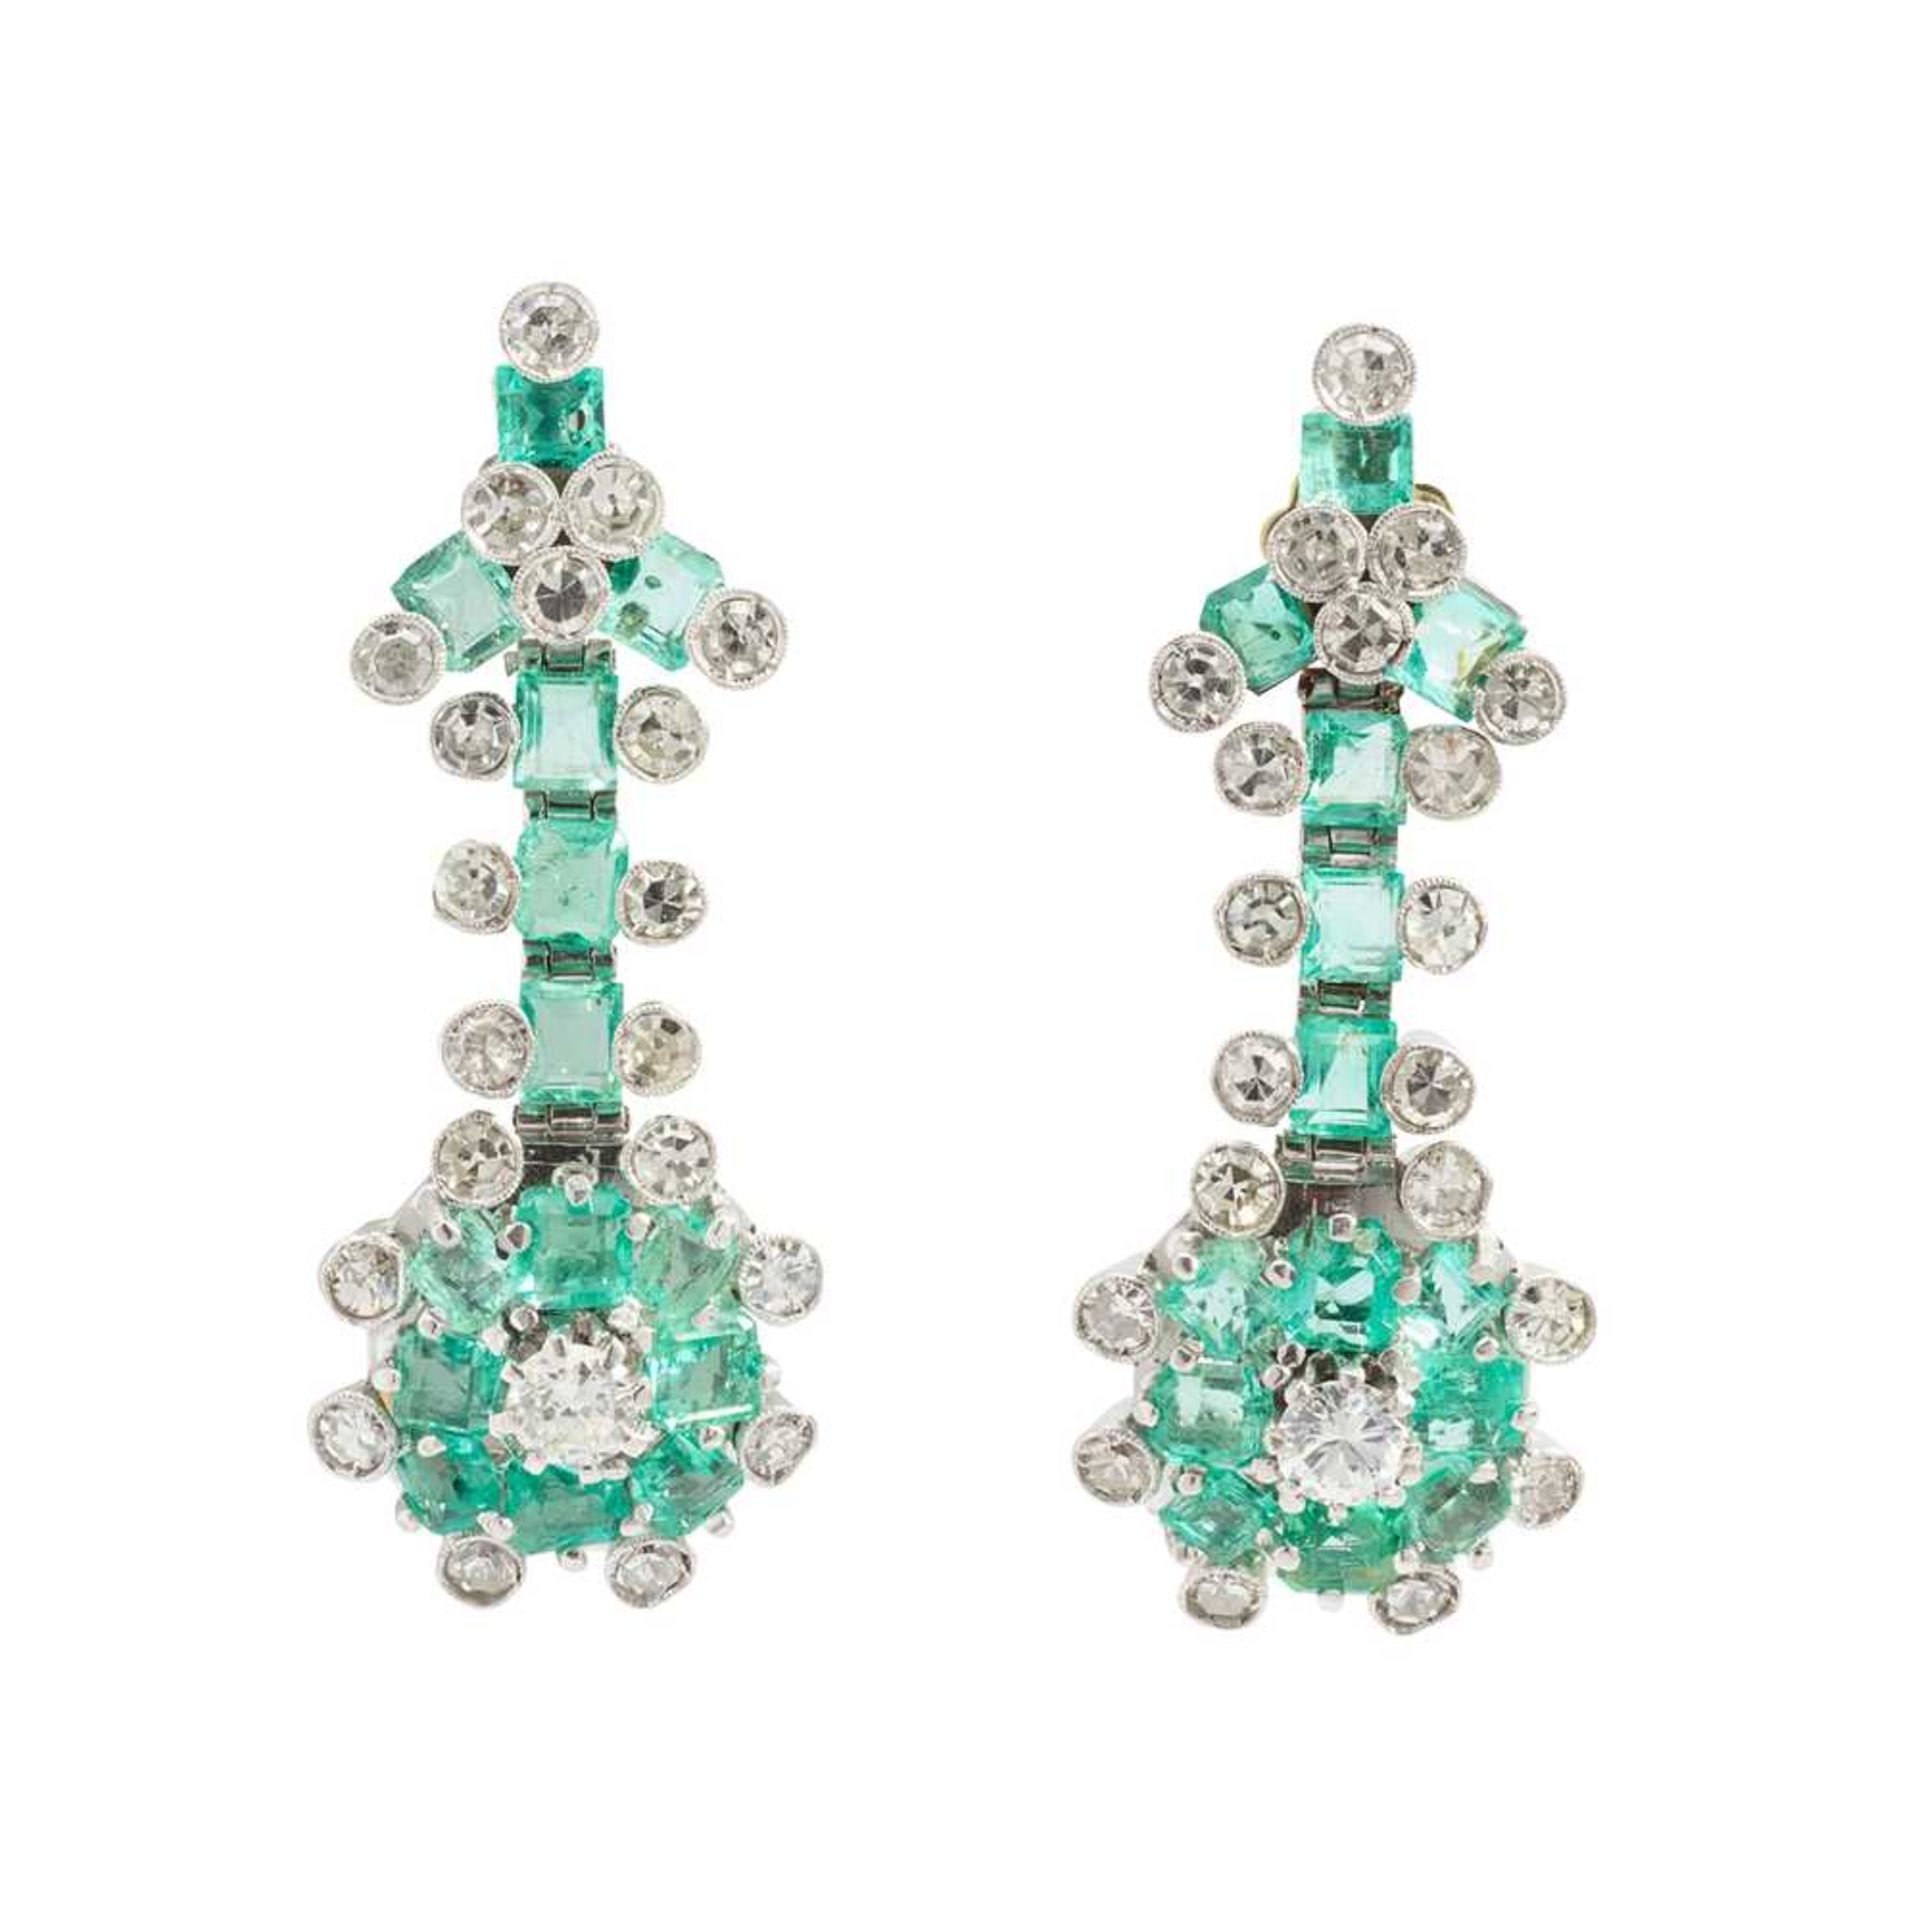 A pair of green beryl and diamond pendent earrings